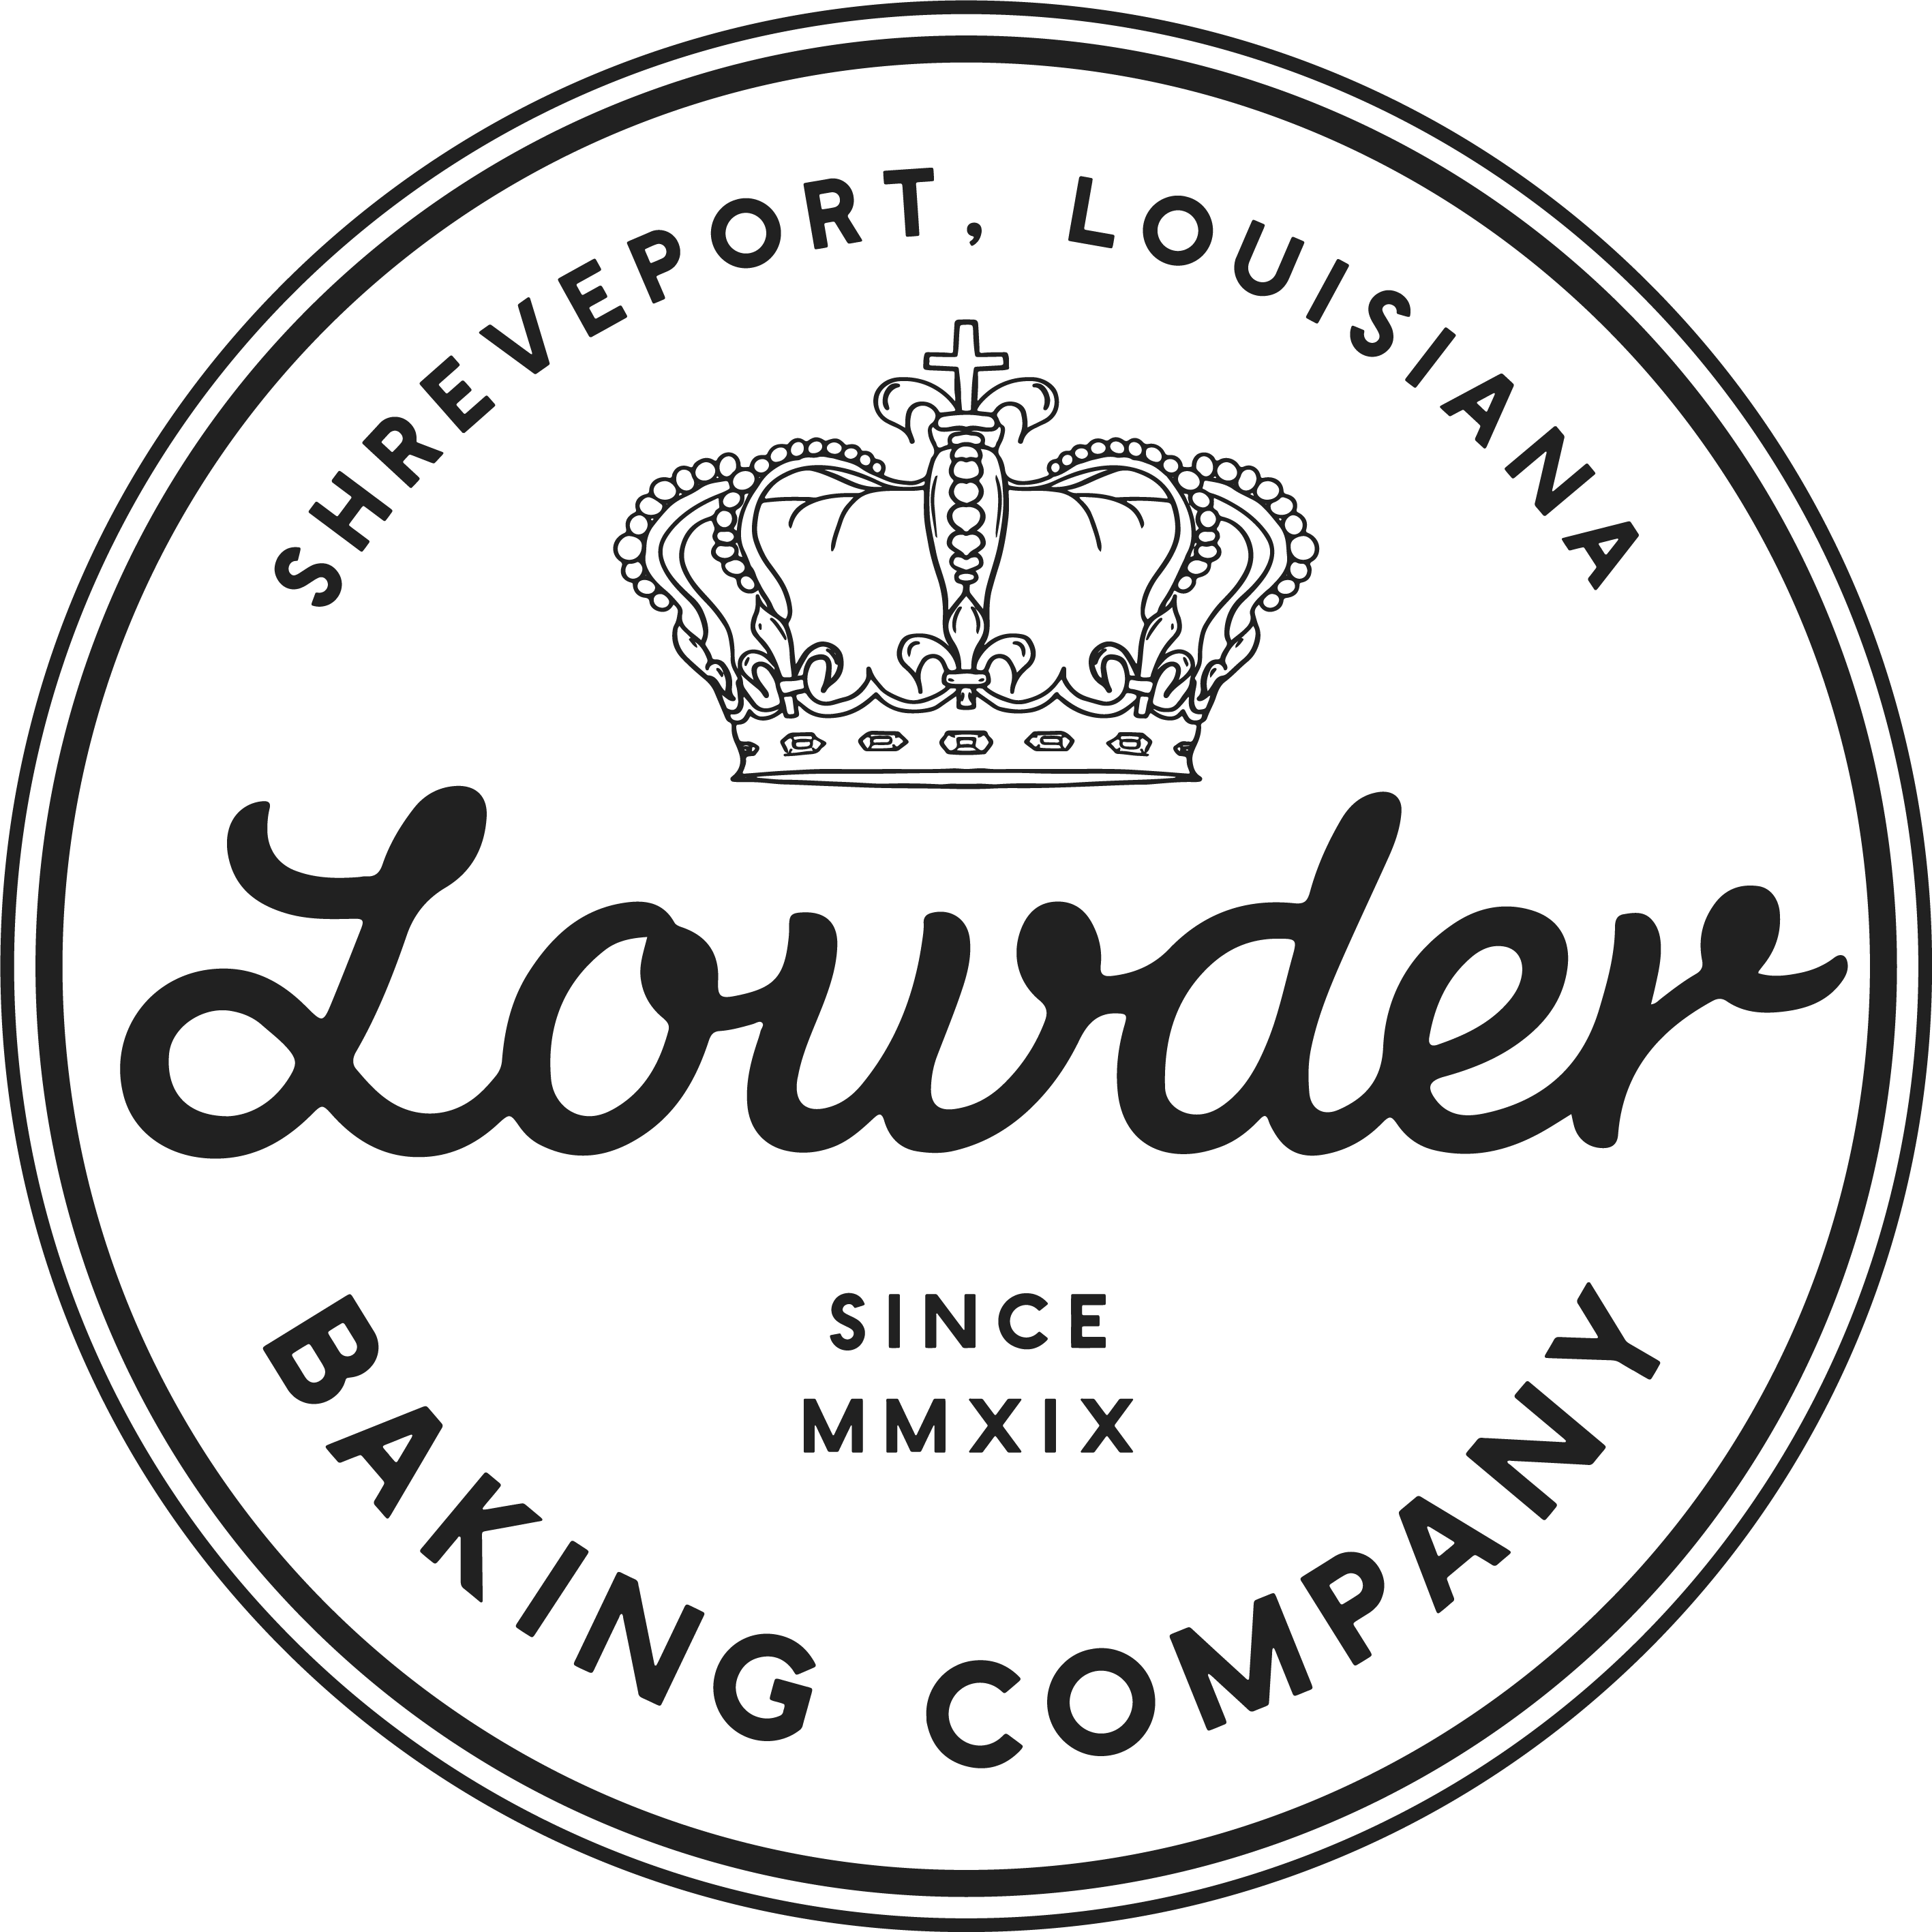 Lowder Baking Company